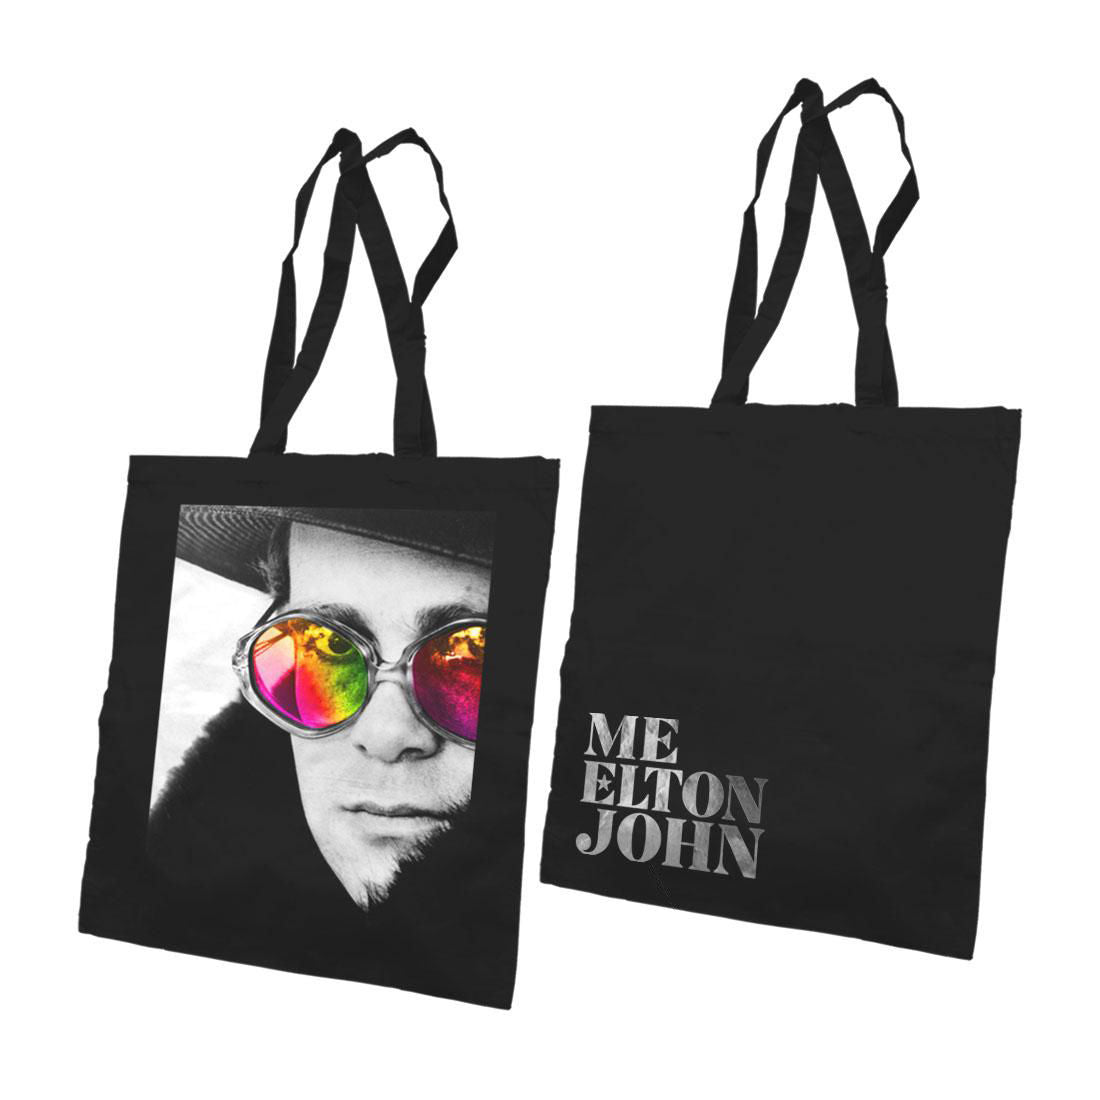 Elton John - ME' Tote Bag